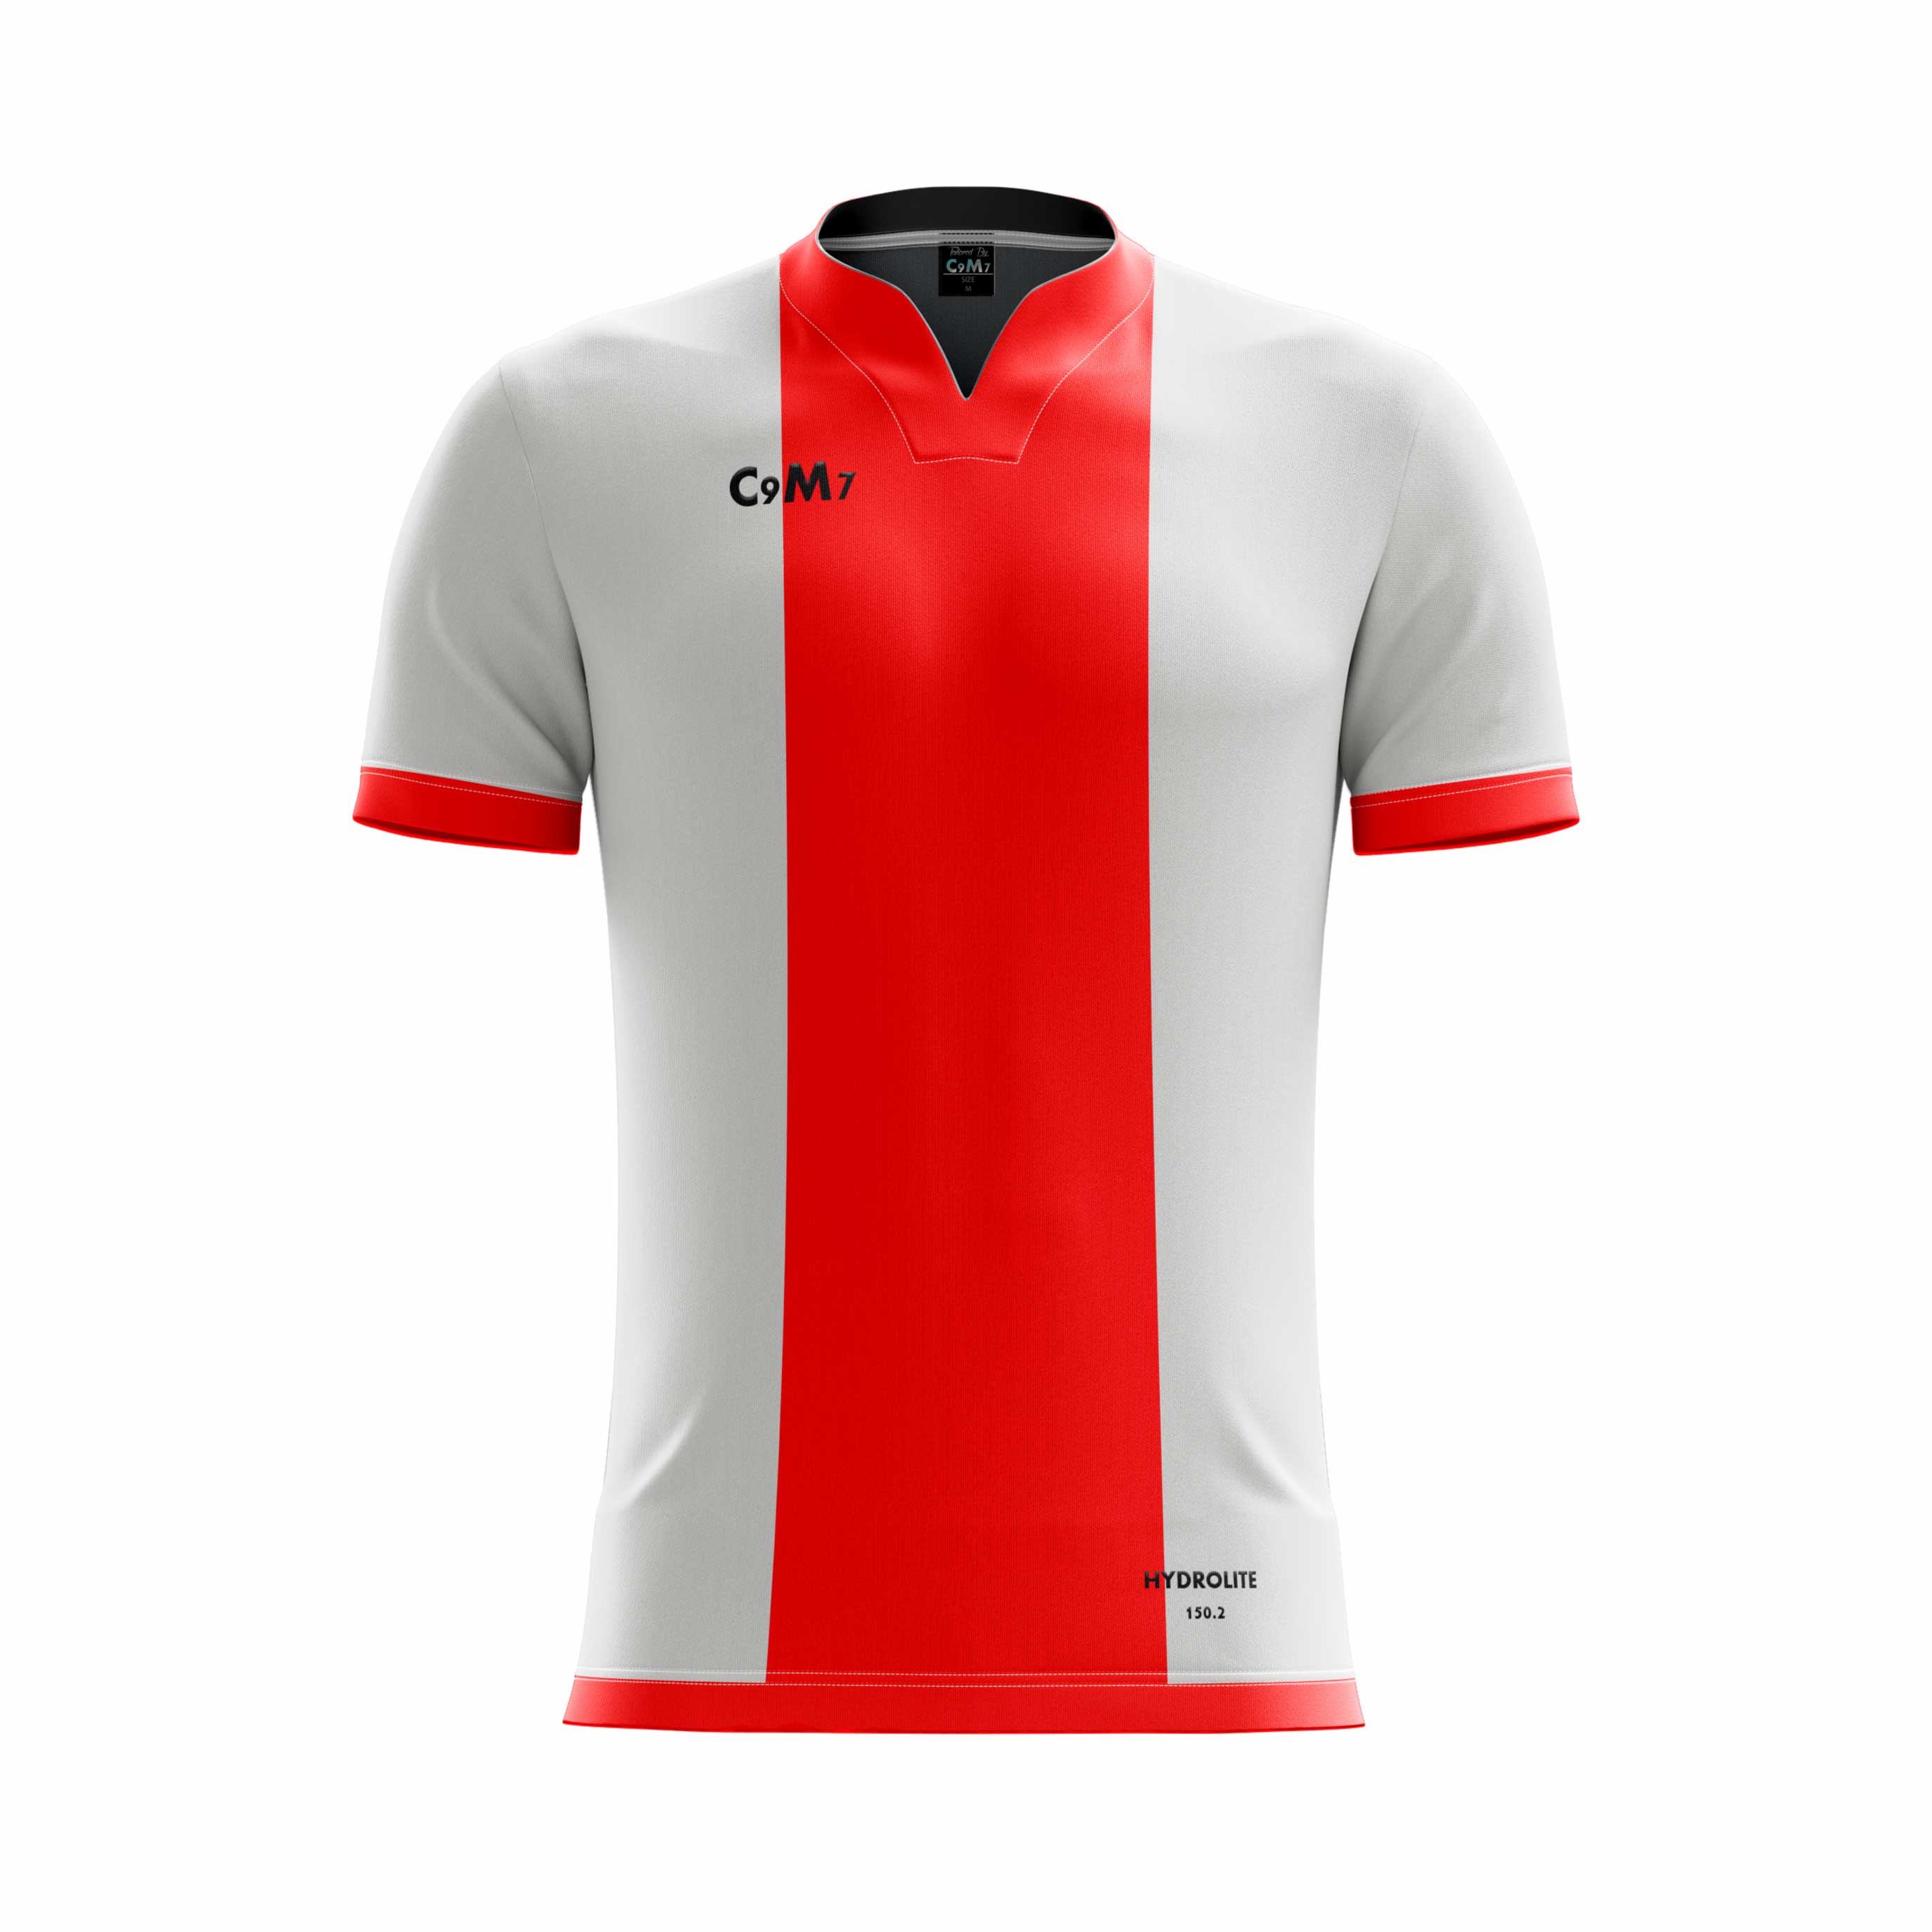 red jersey design football